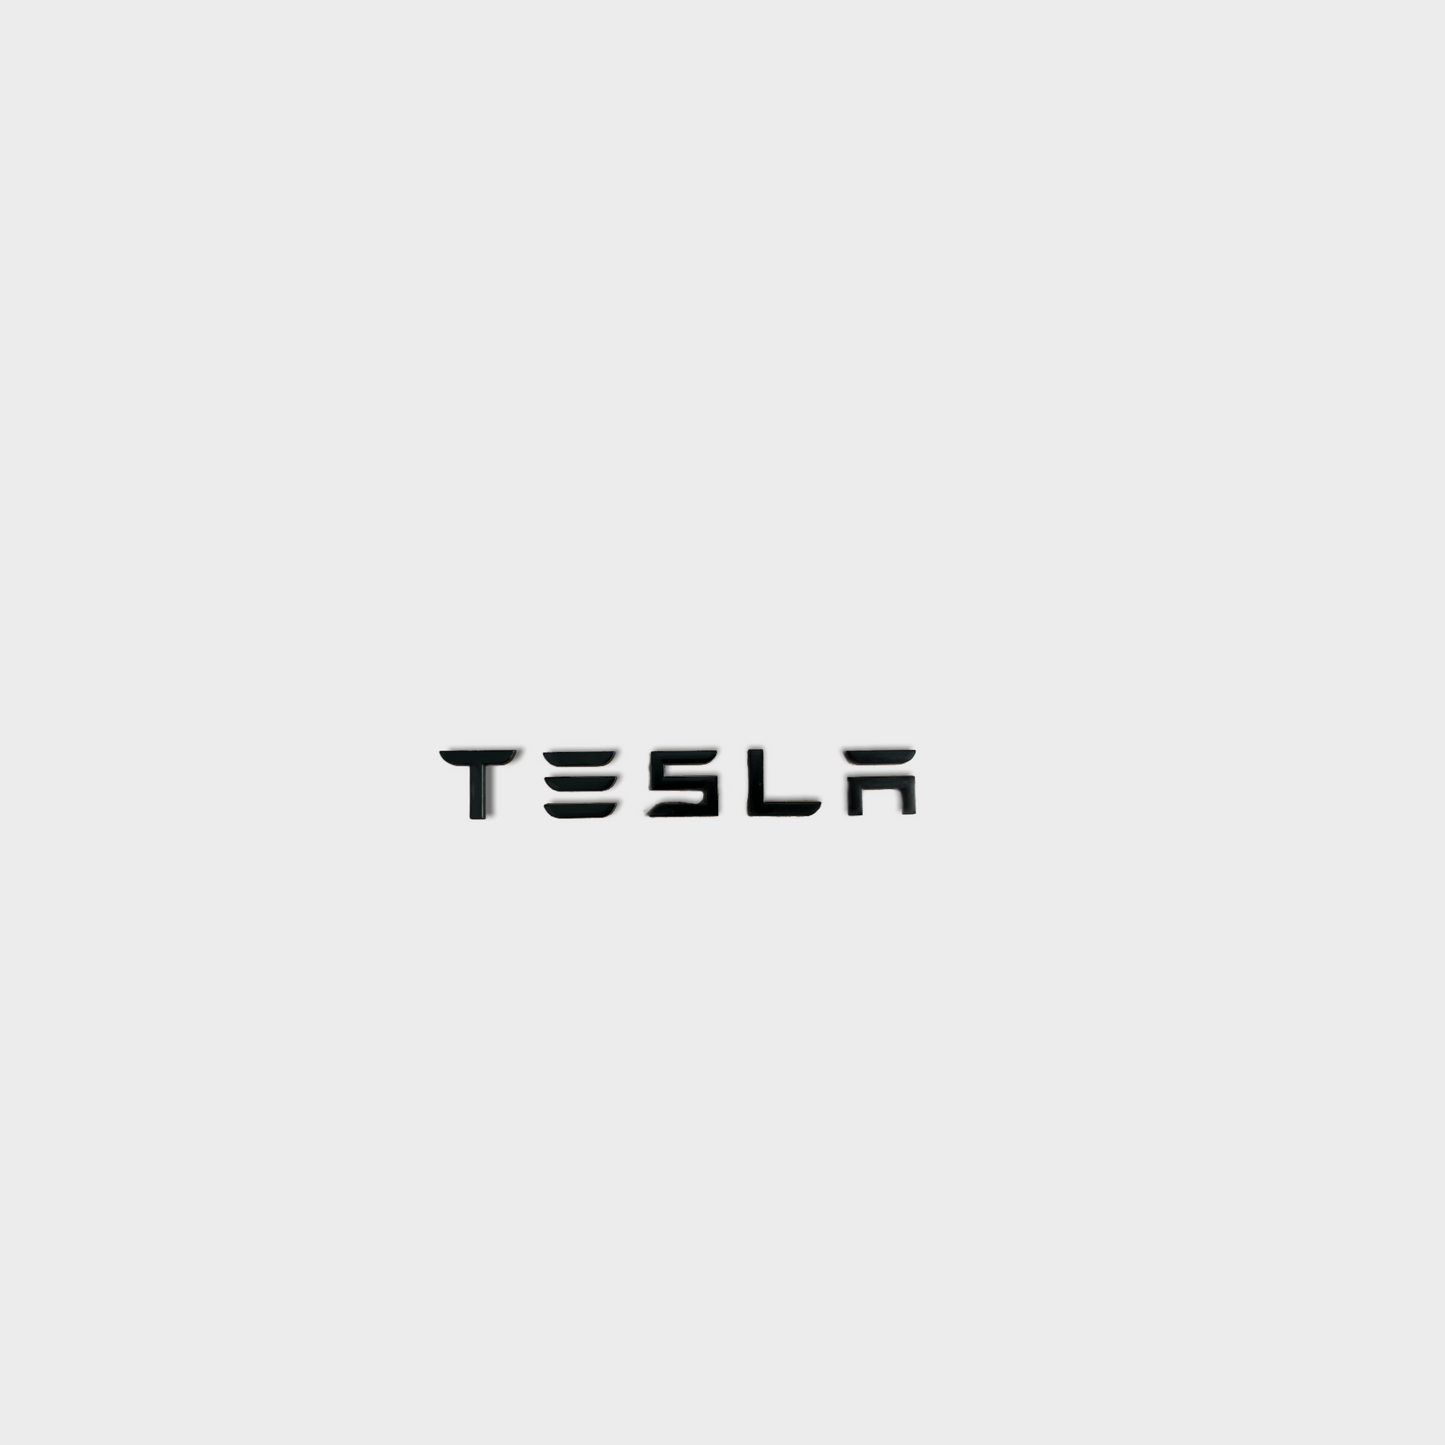 Tesla lettering